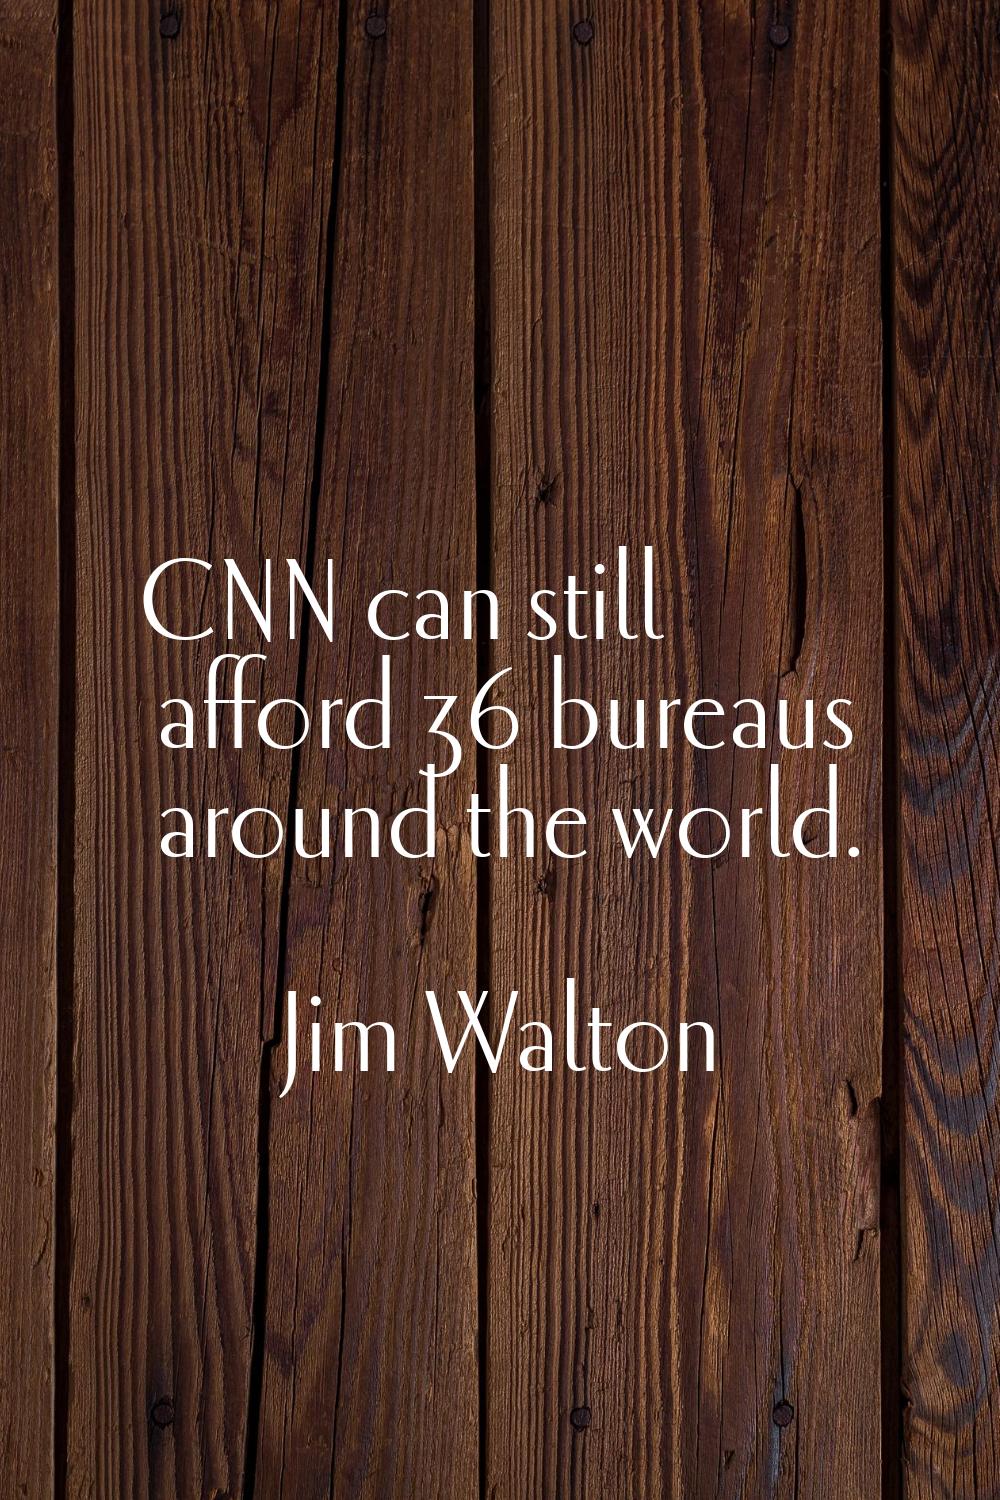 CNN can still afford 36 bureaus around the world.